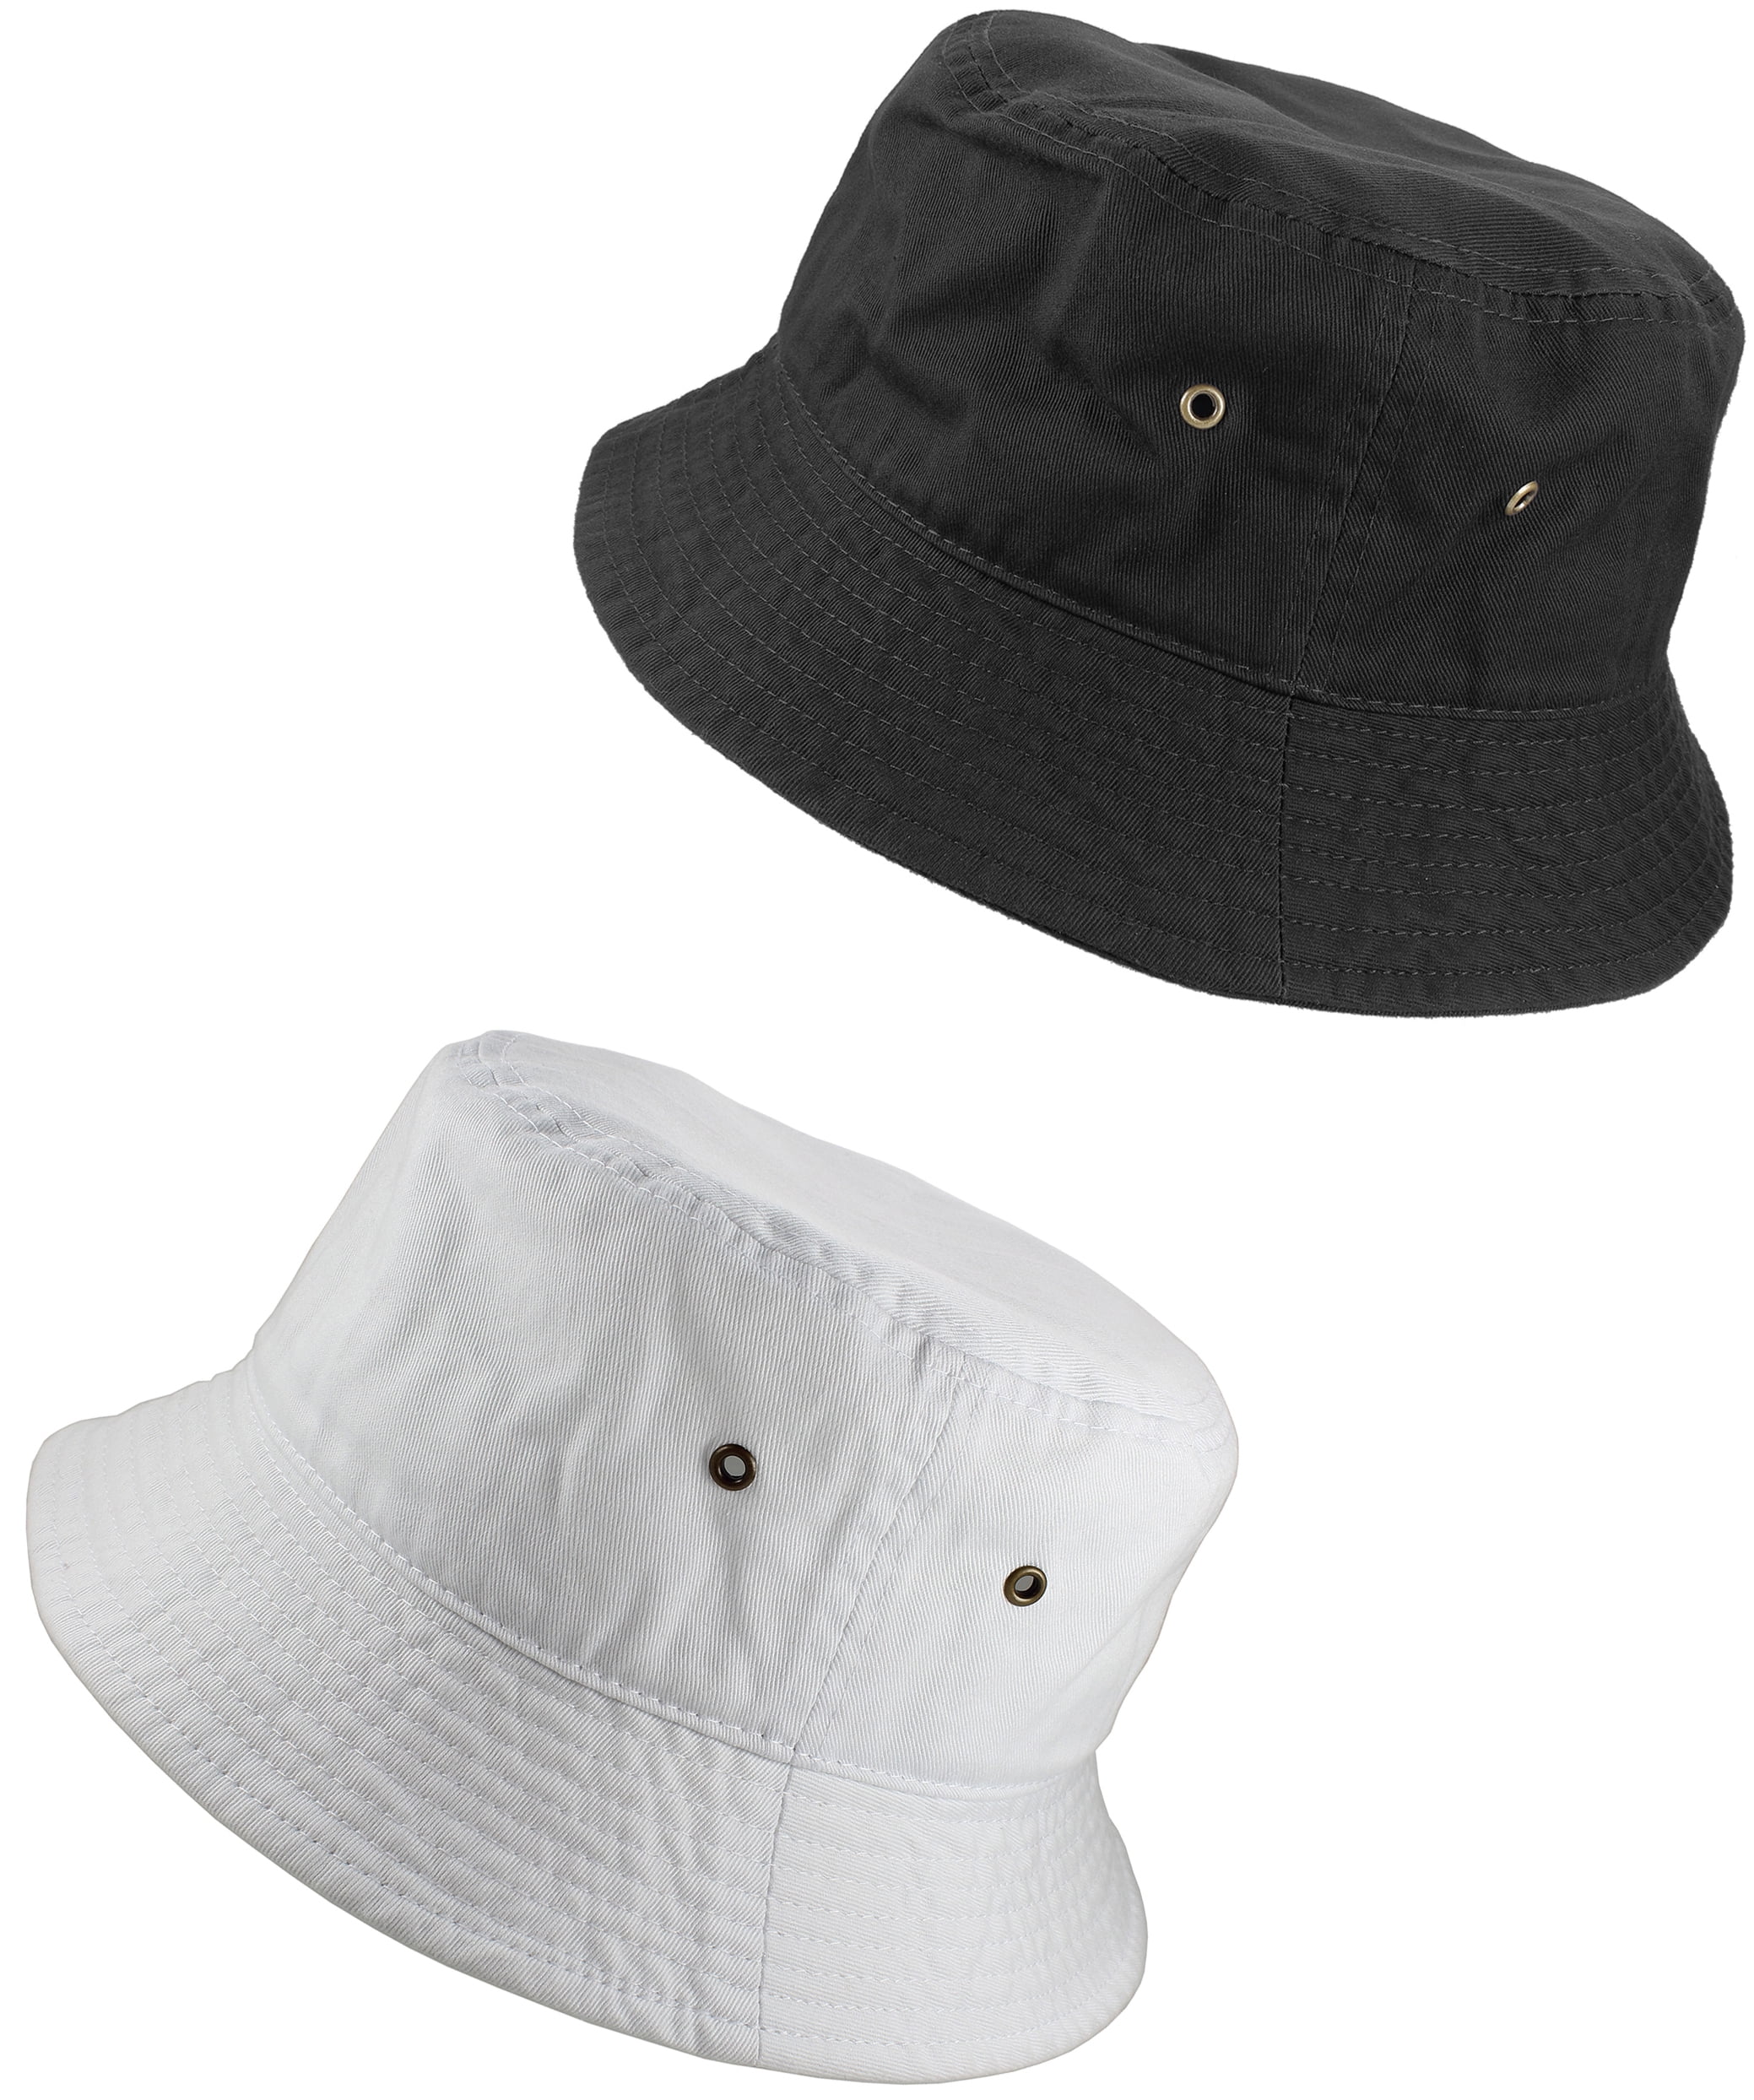 I Am The Best Unisex Cotton Packable Black Travel Bucket Hat Fishing Cap